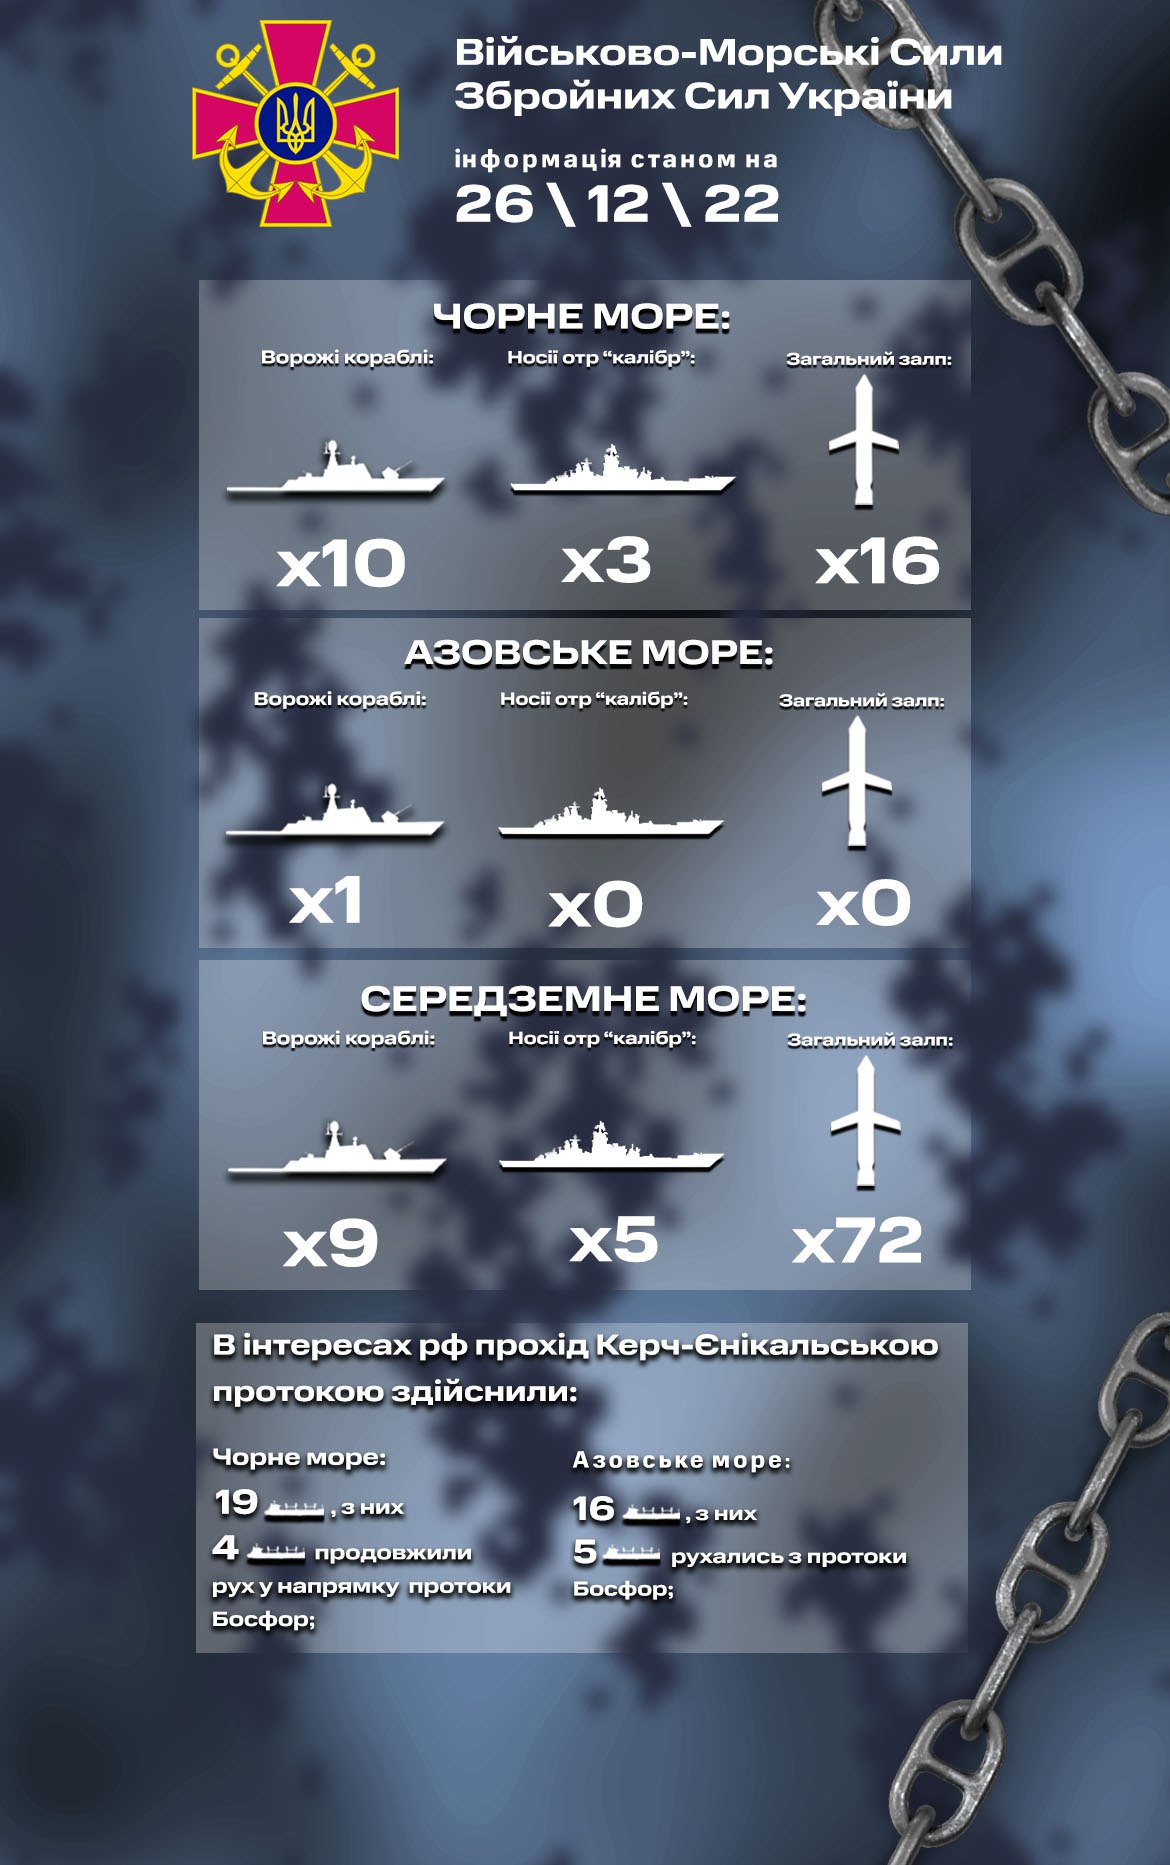 ракетоносители в Черном море